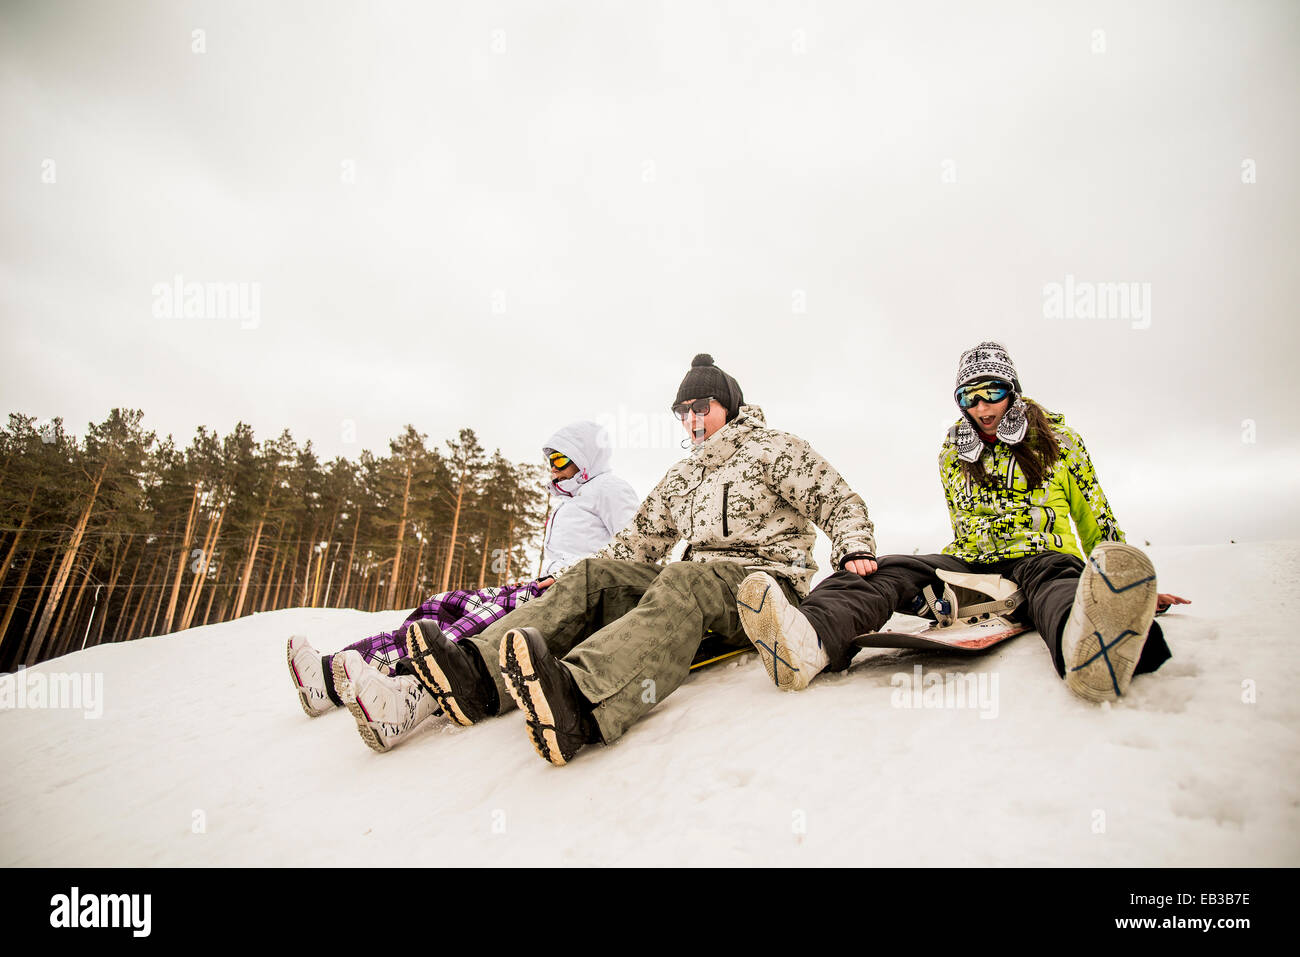 Caucasian friends sitting on snowboards Stock Photo